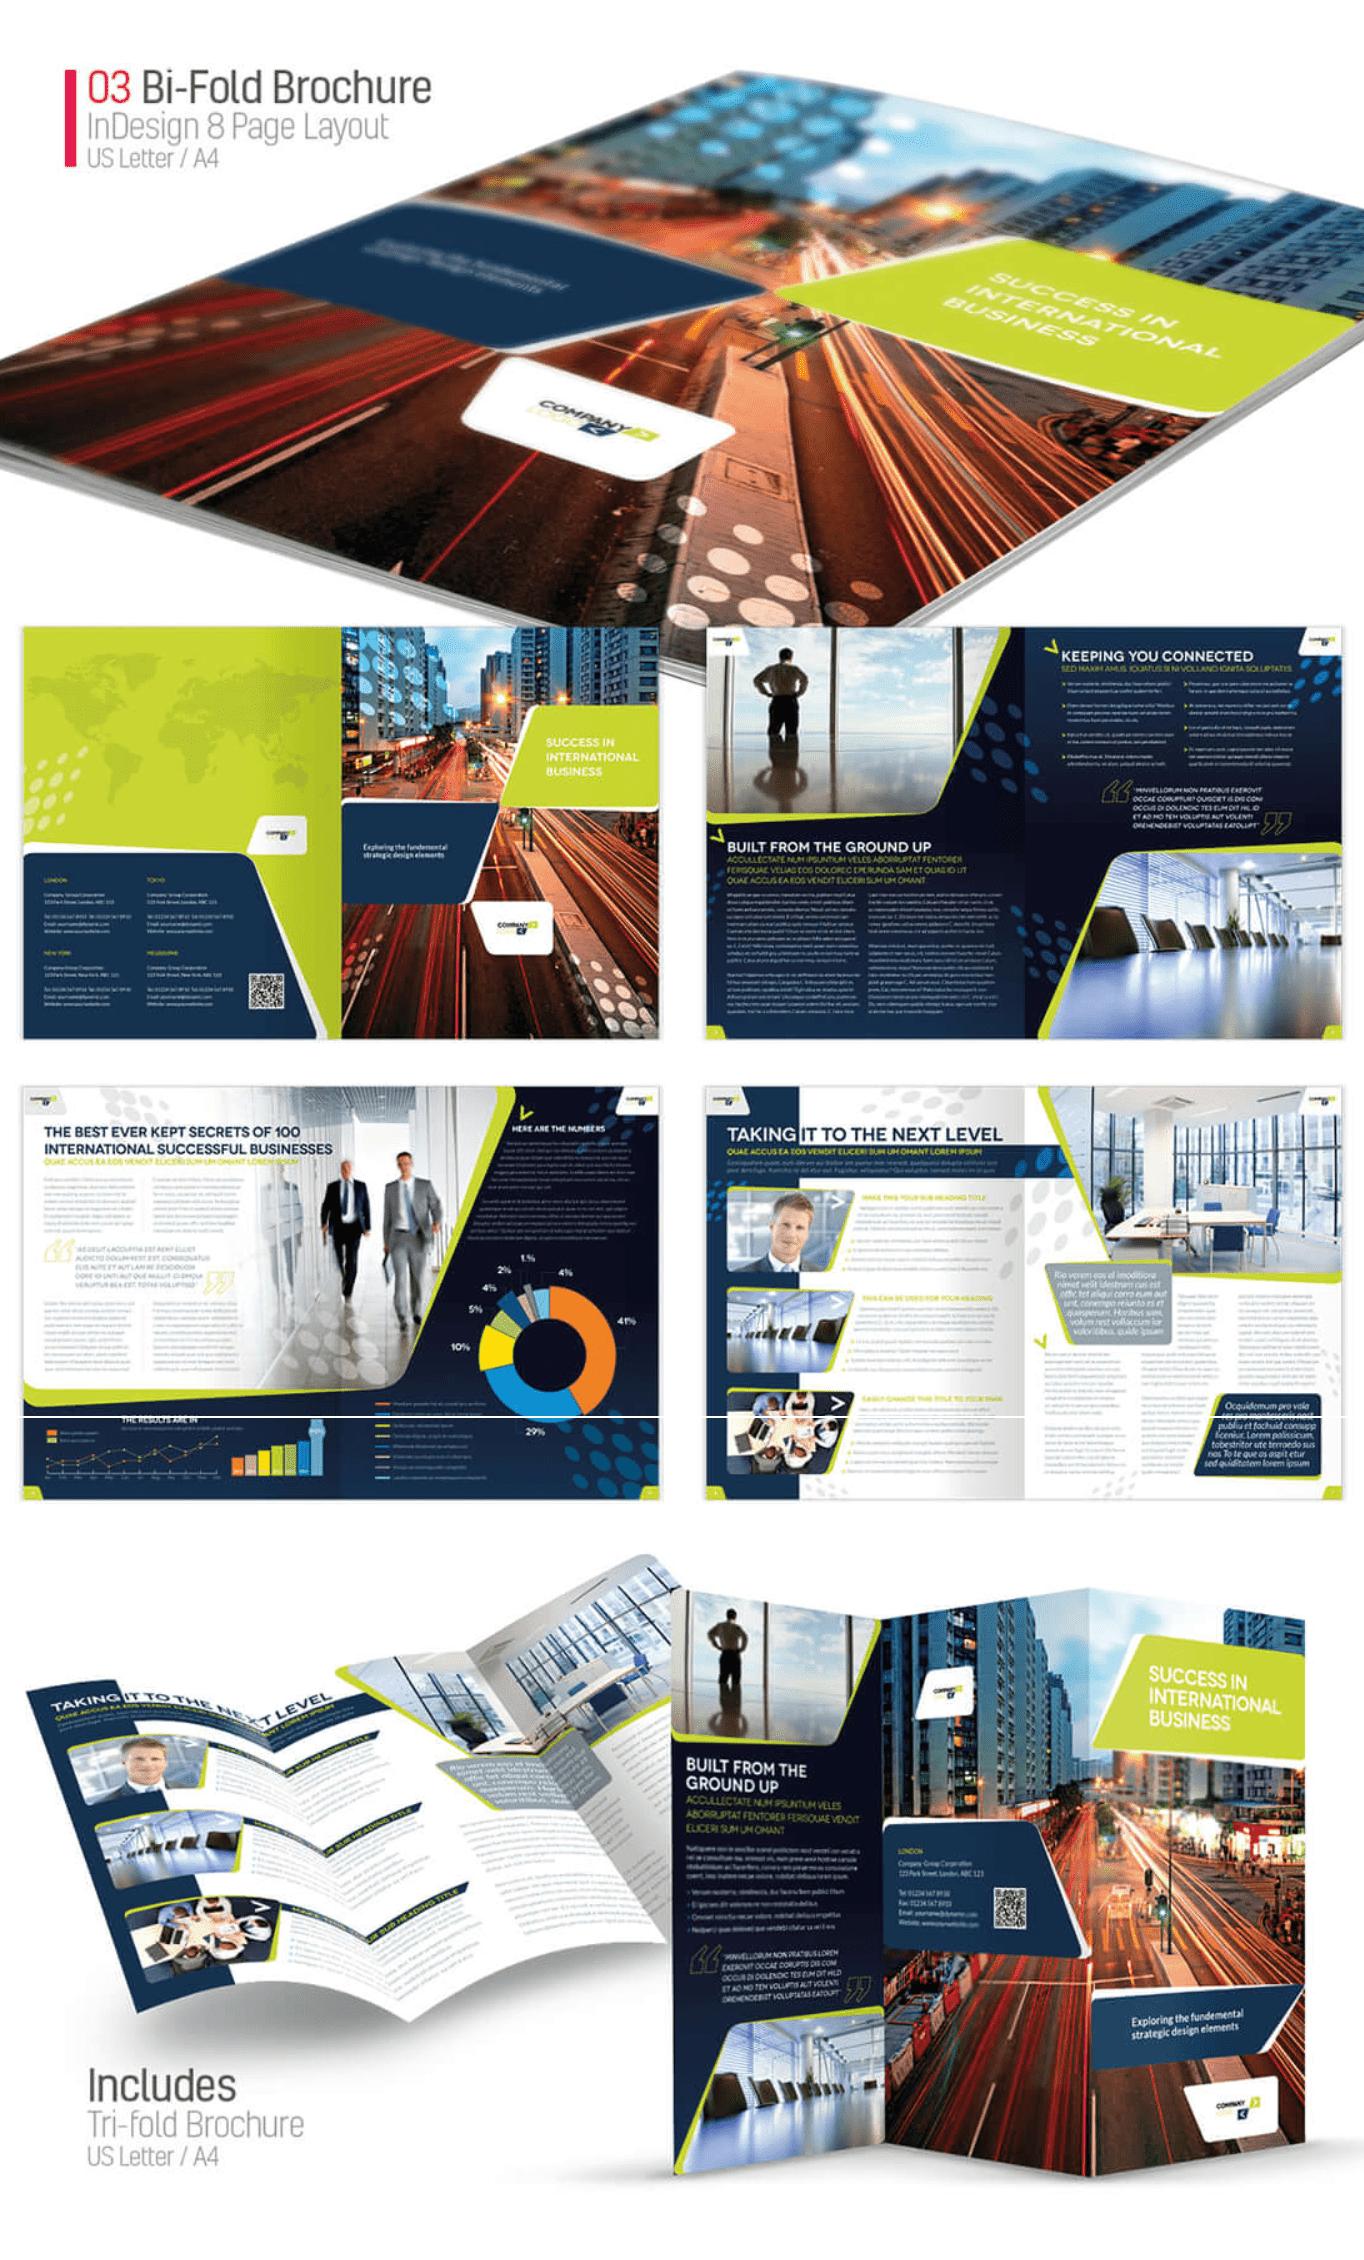 8 Print-Ready Bi-Fold & Tri-Fold Brochure Templates - Artixty